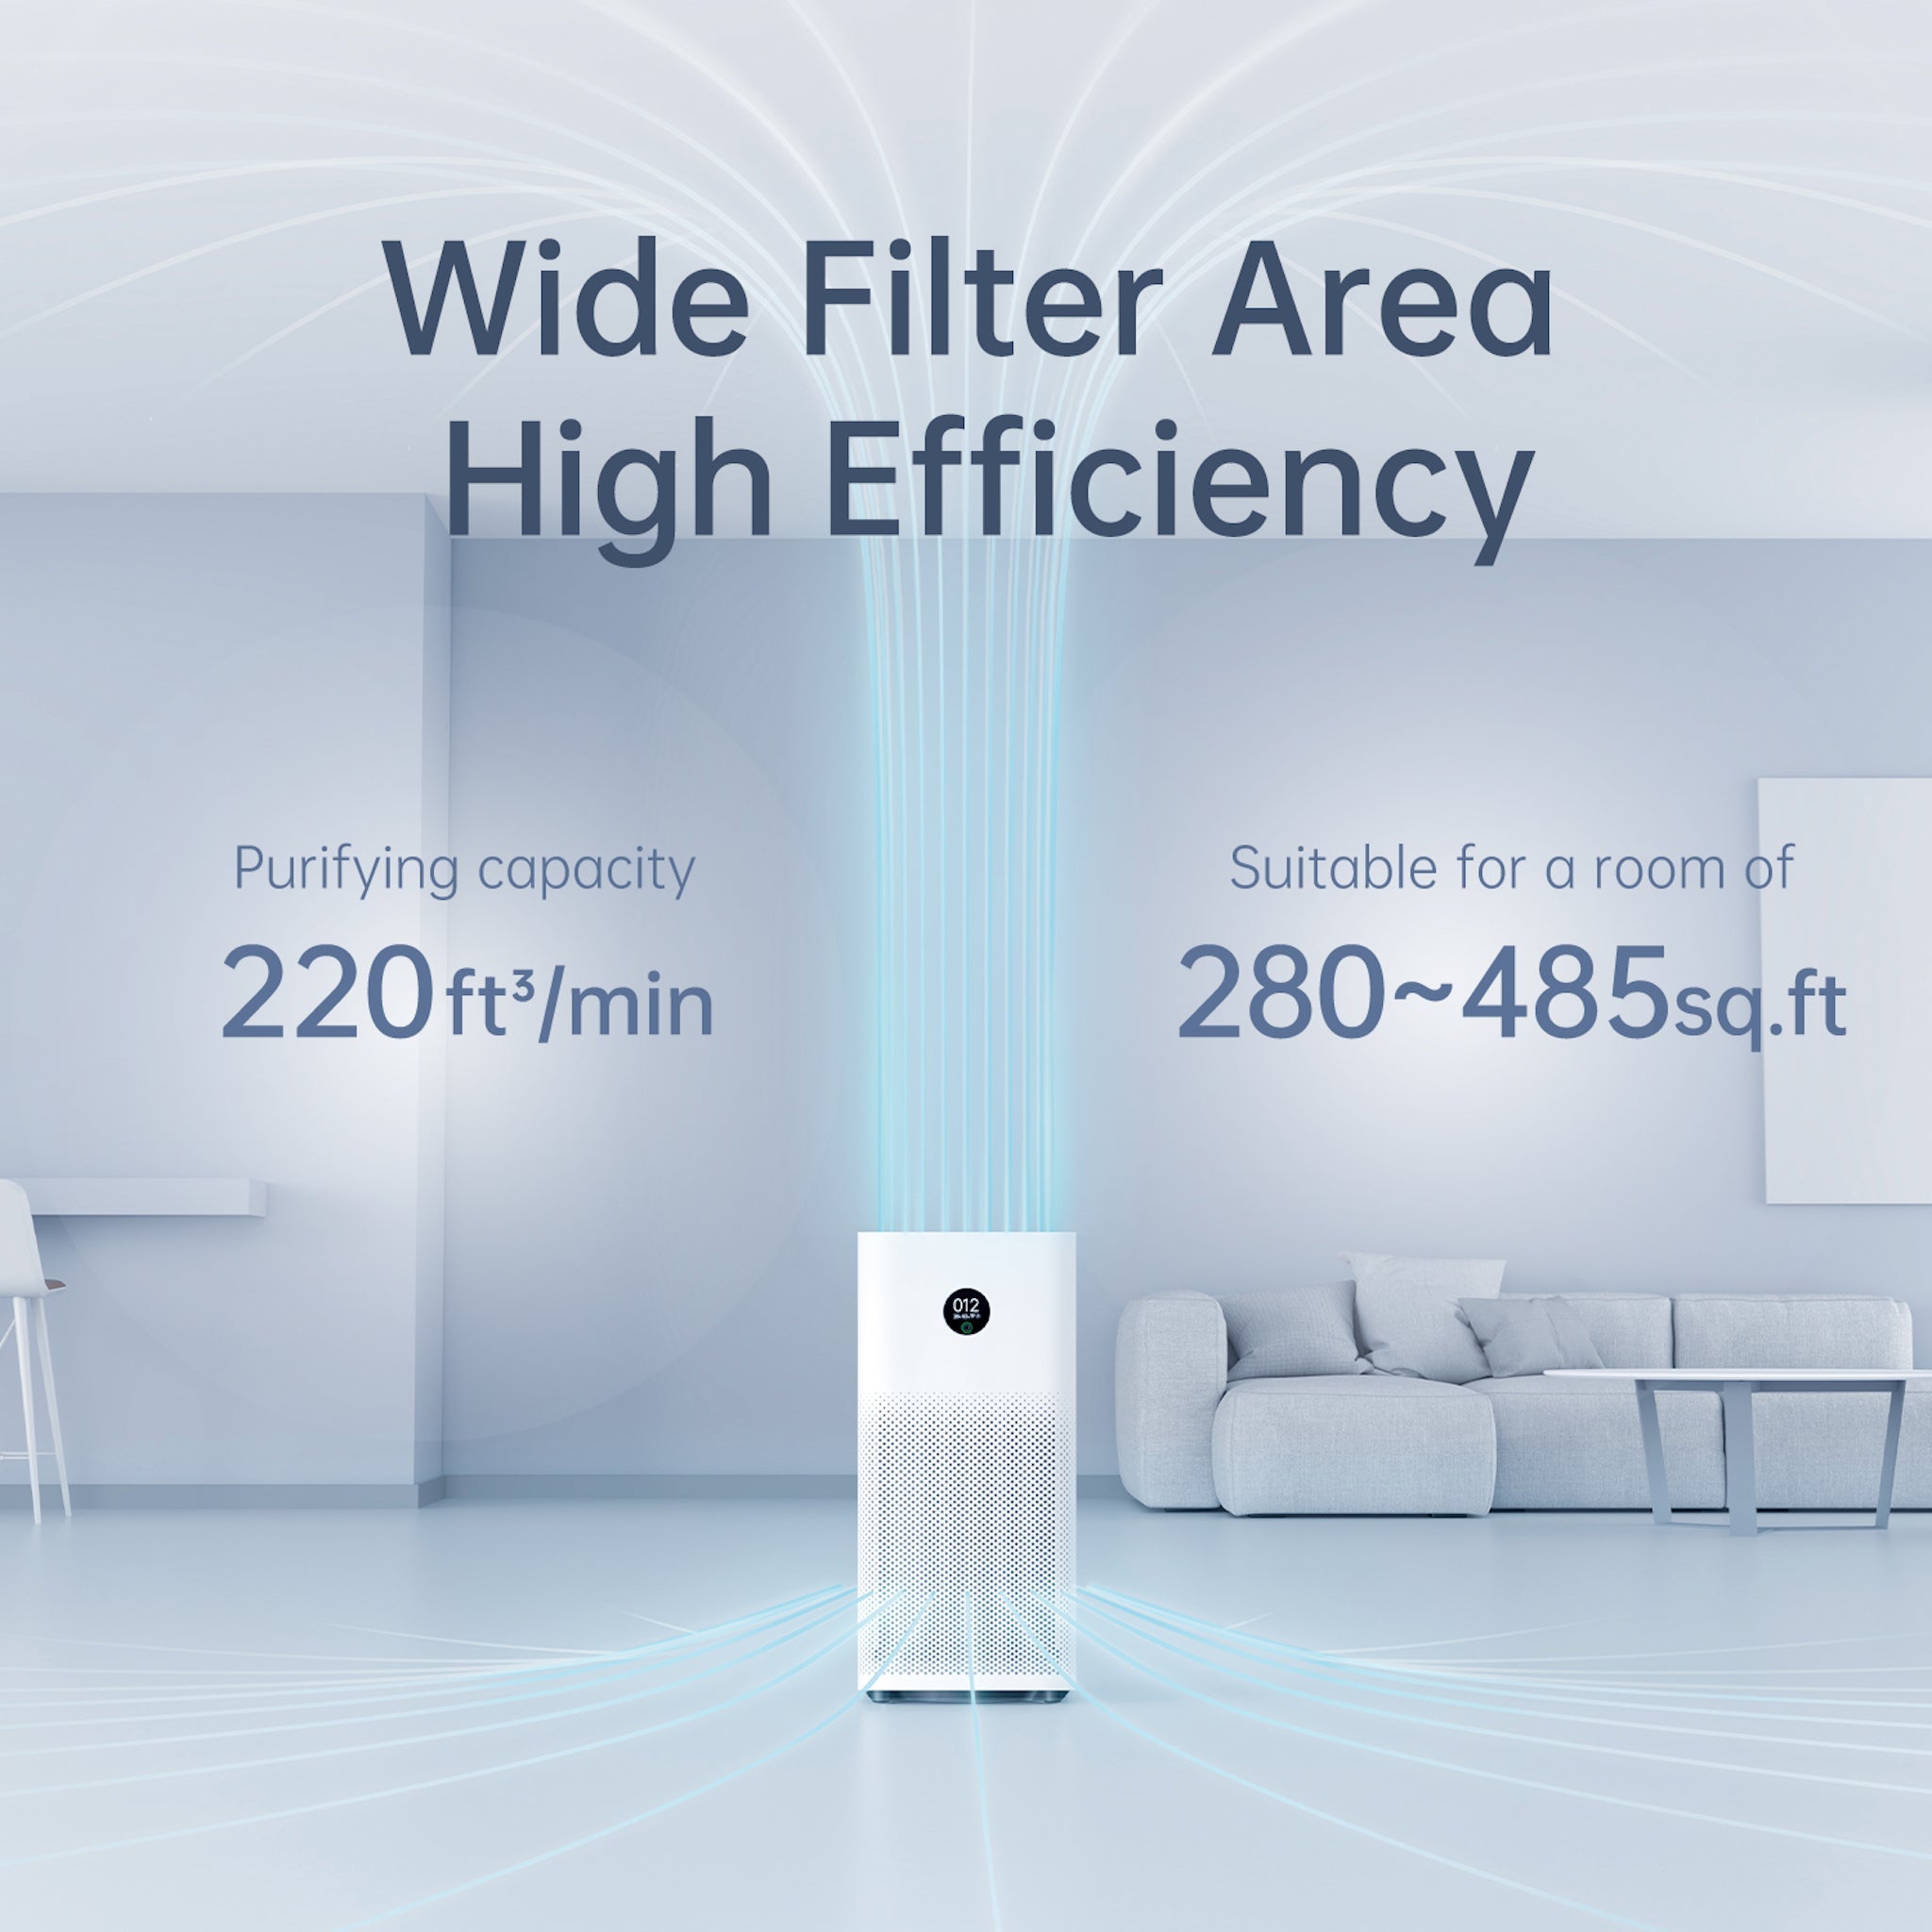 Xiaomi Mi Air Purifier 3H – DIGI Smart Home